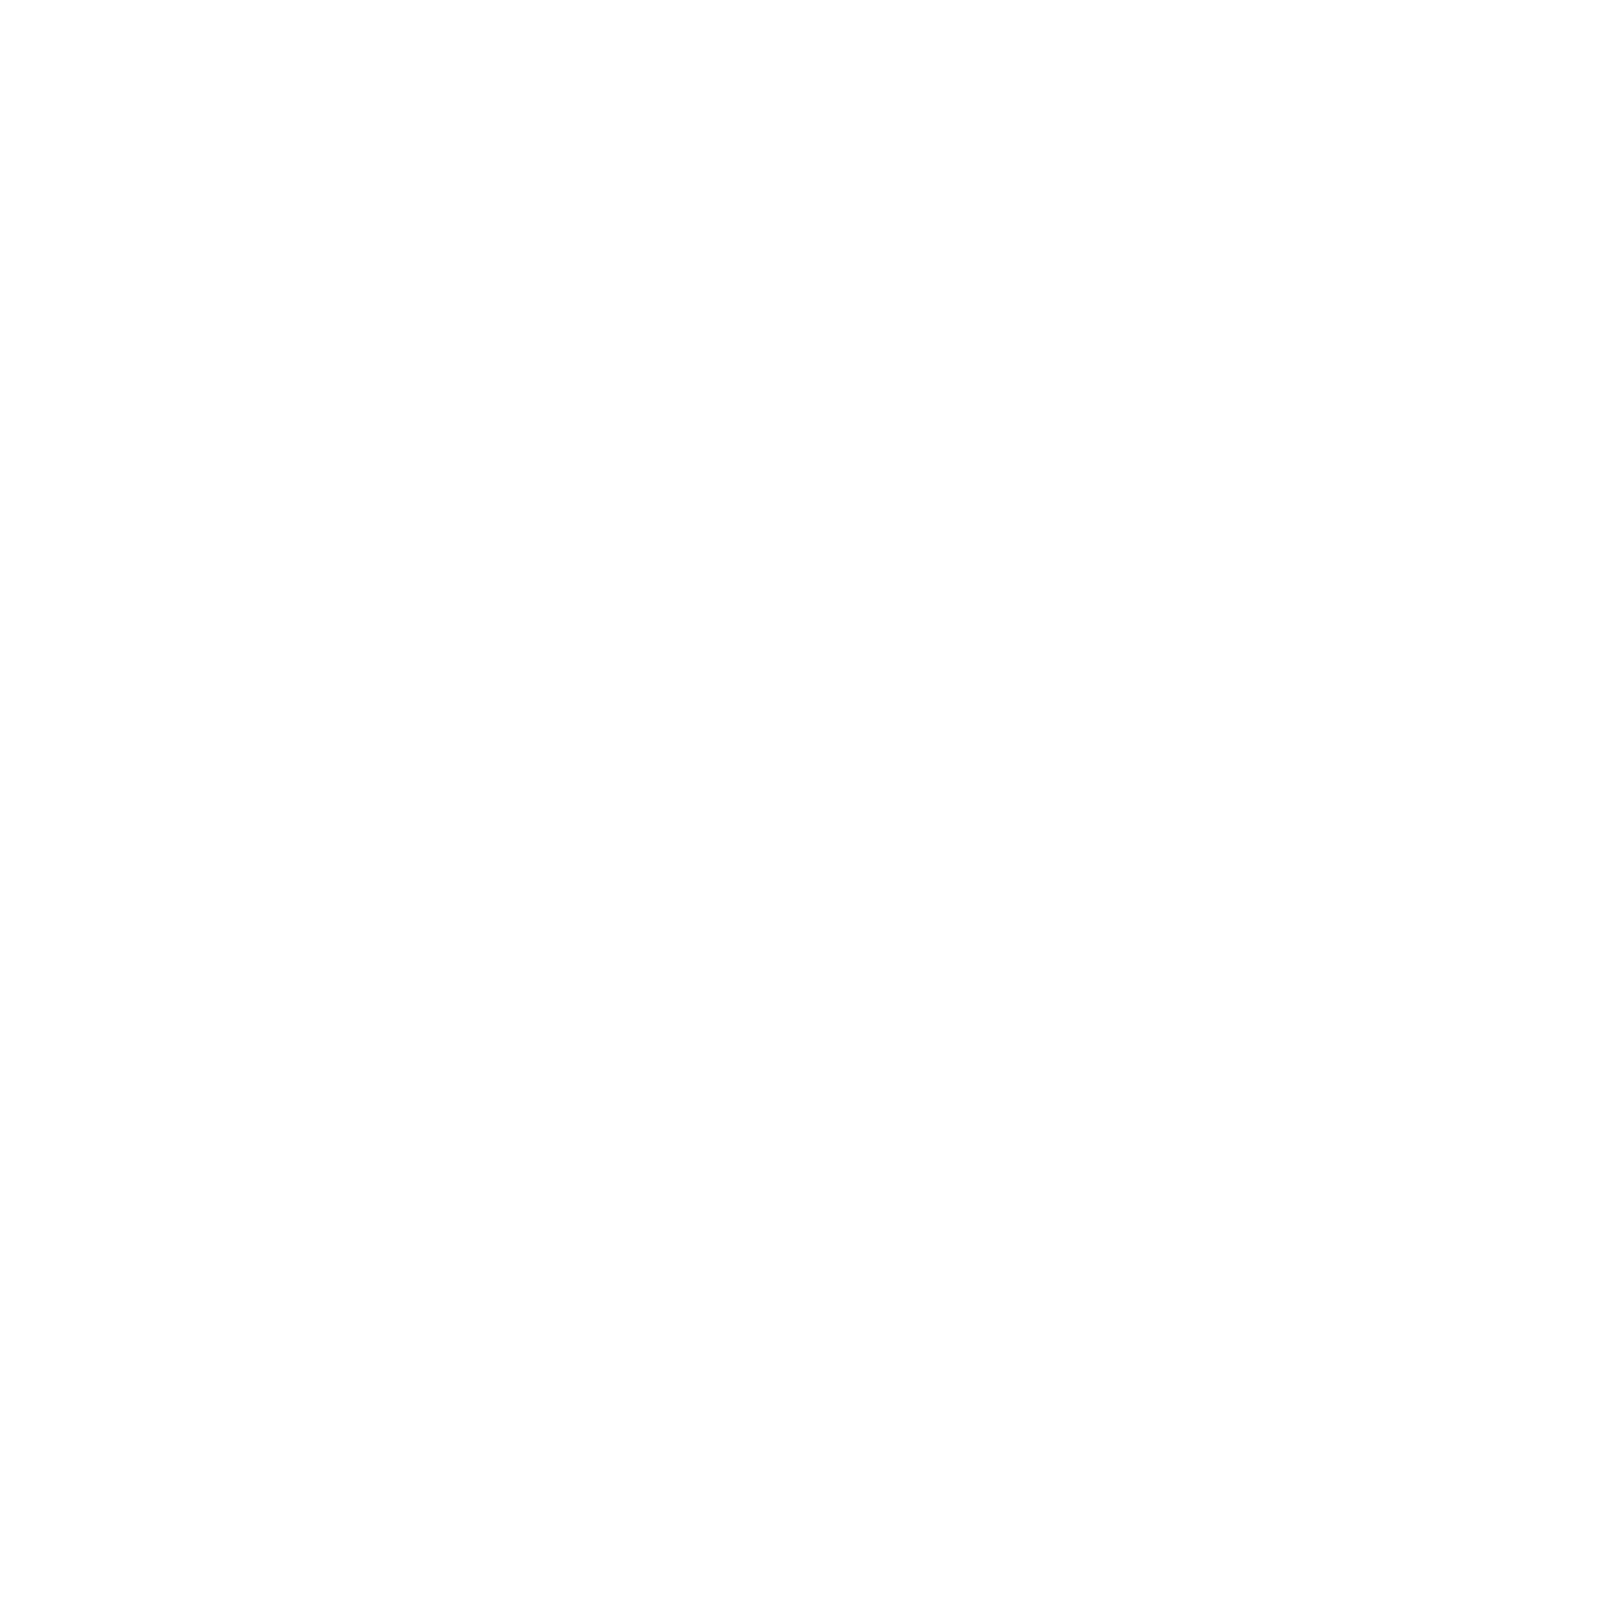 AO World logo for dark backgrounds (transparent PNG)